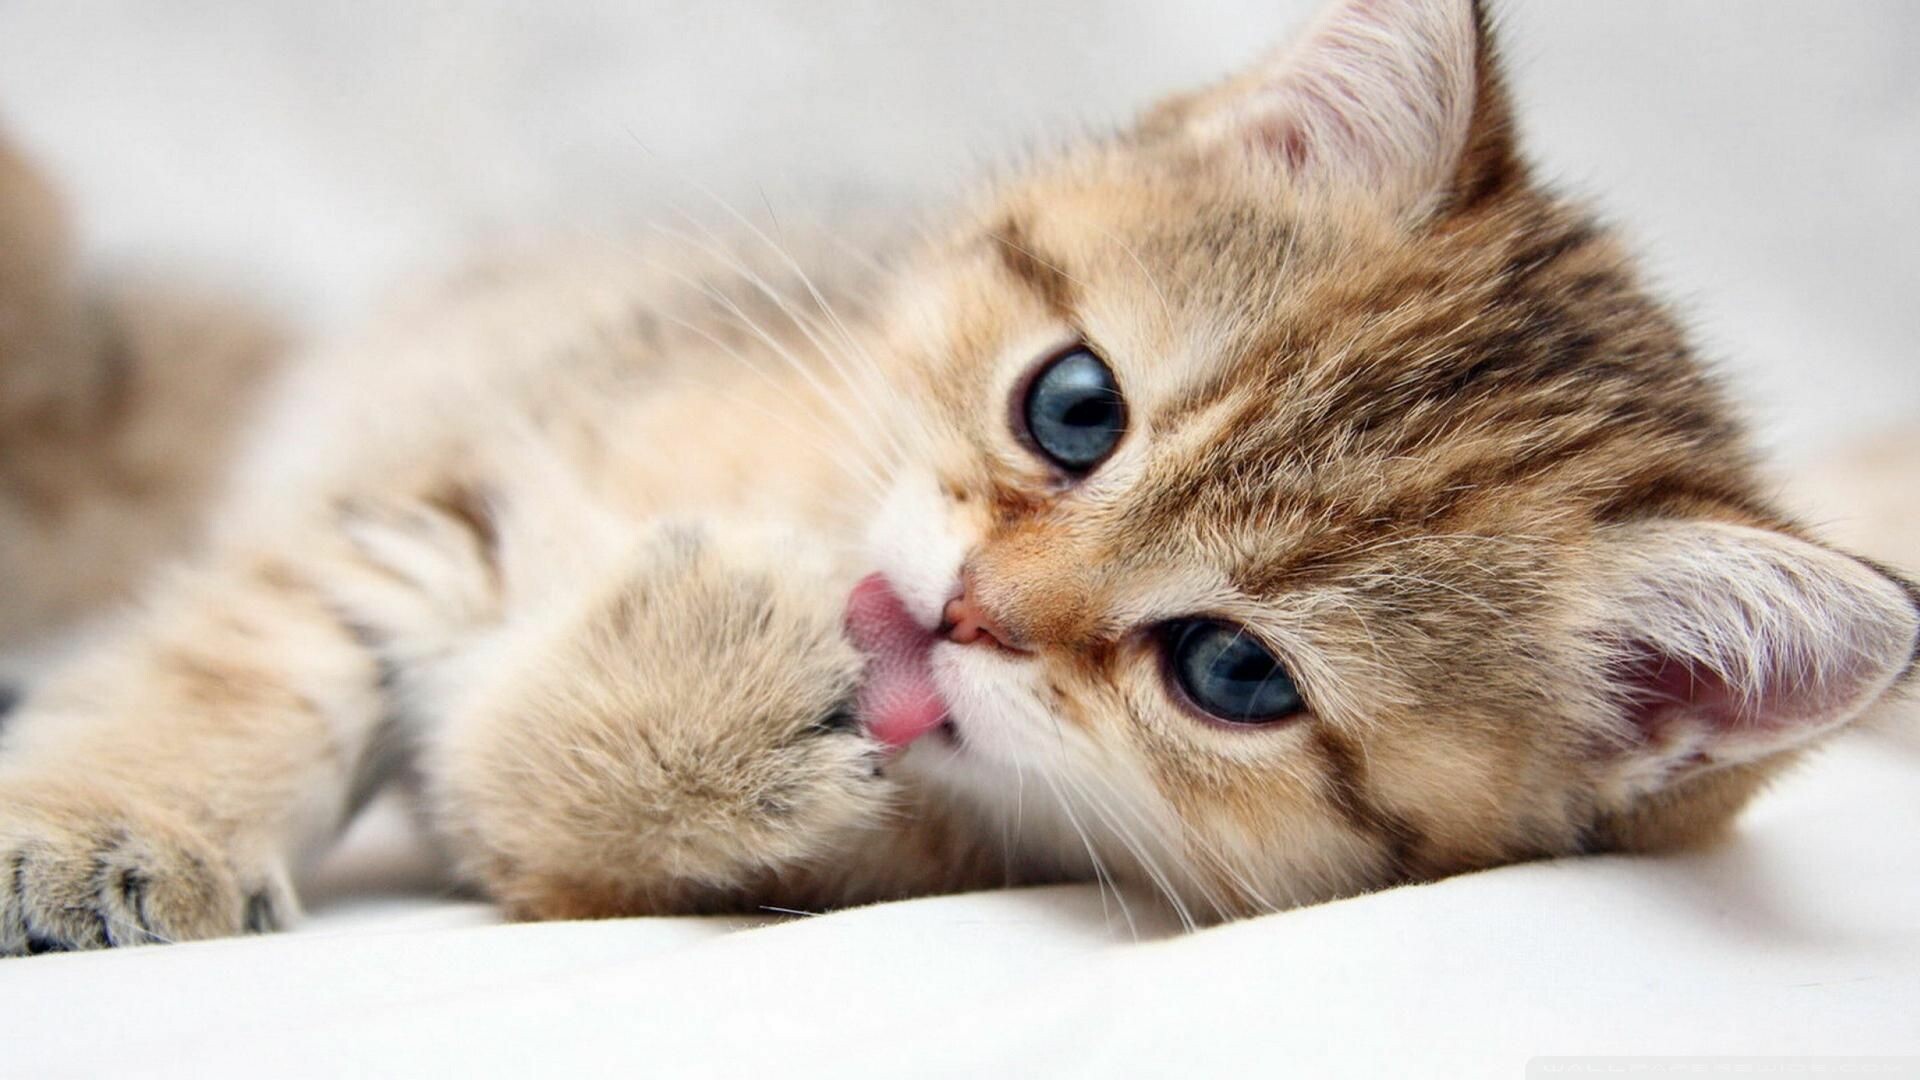 Kitten: A juvenile mammal, Cat, Felidae. 1920x1080 Full HD Wallpaper.